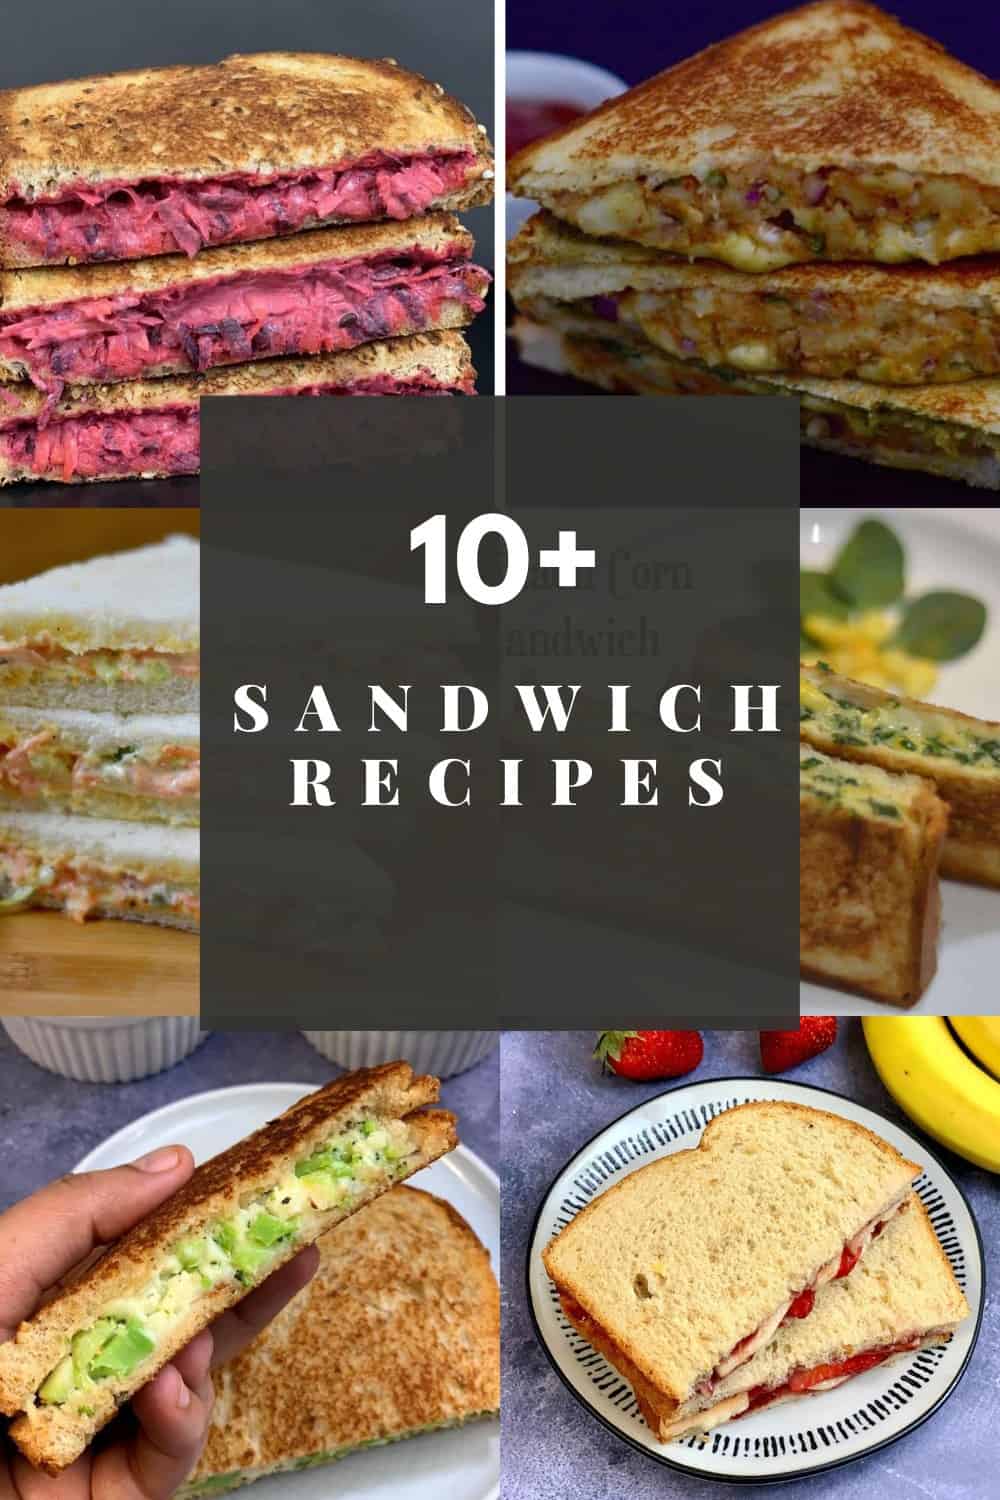 Vegetarian Sandwich Recipes